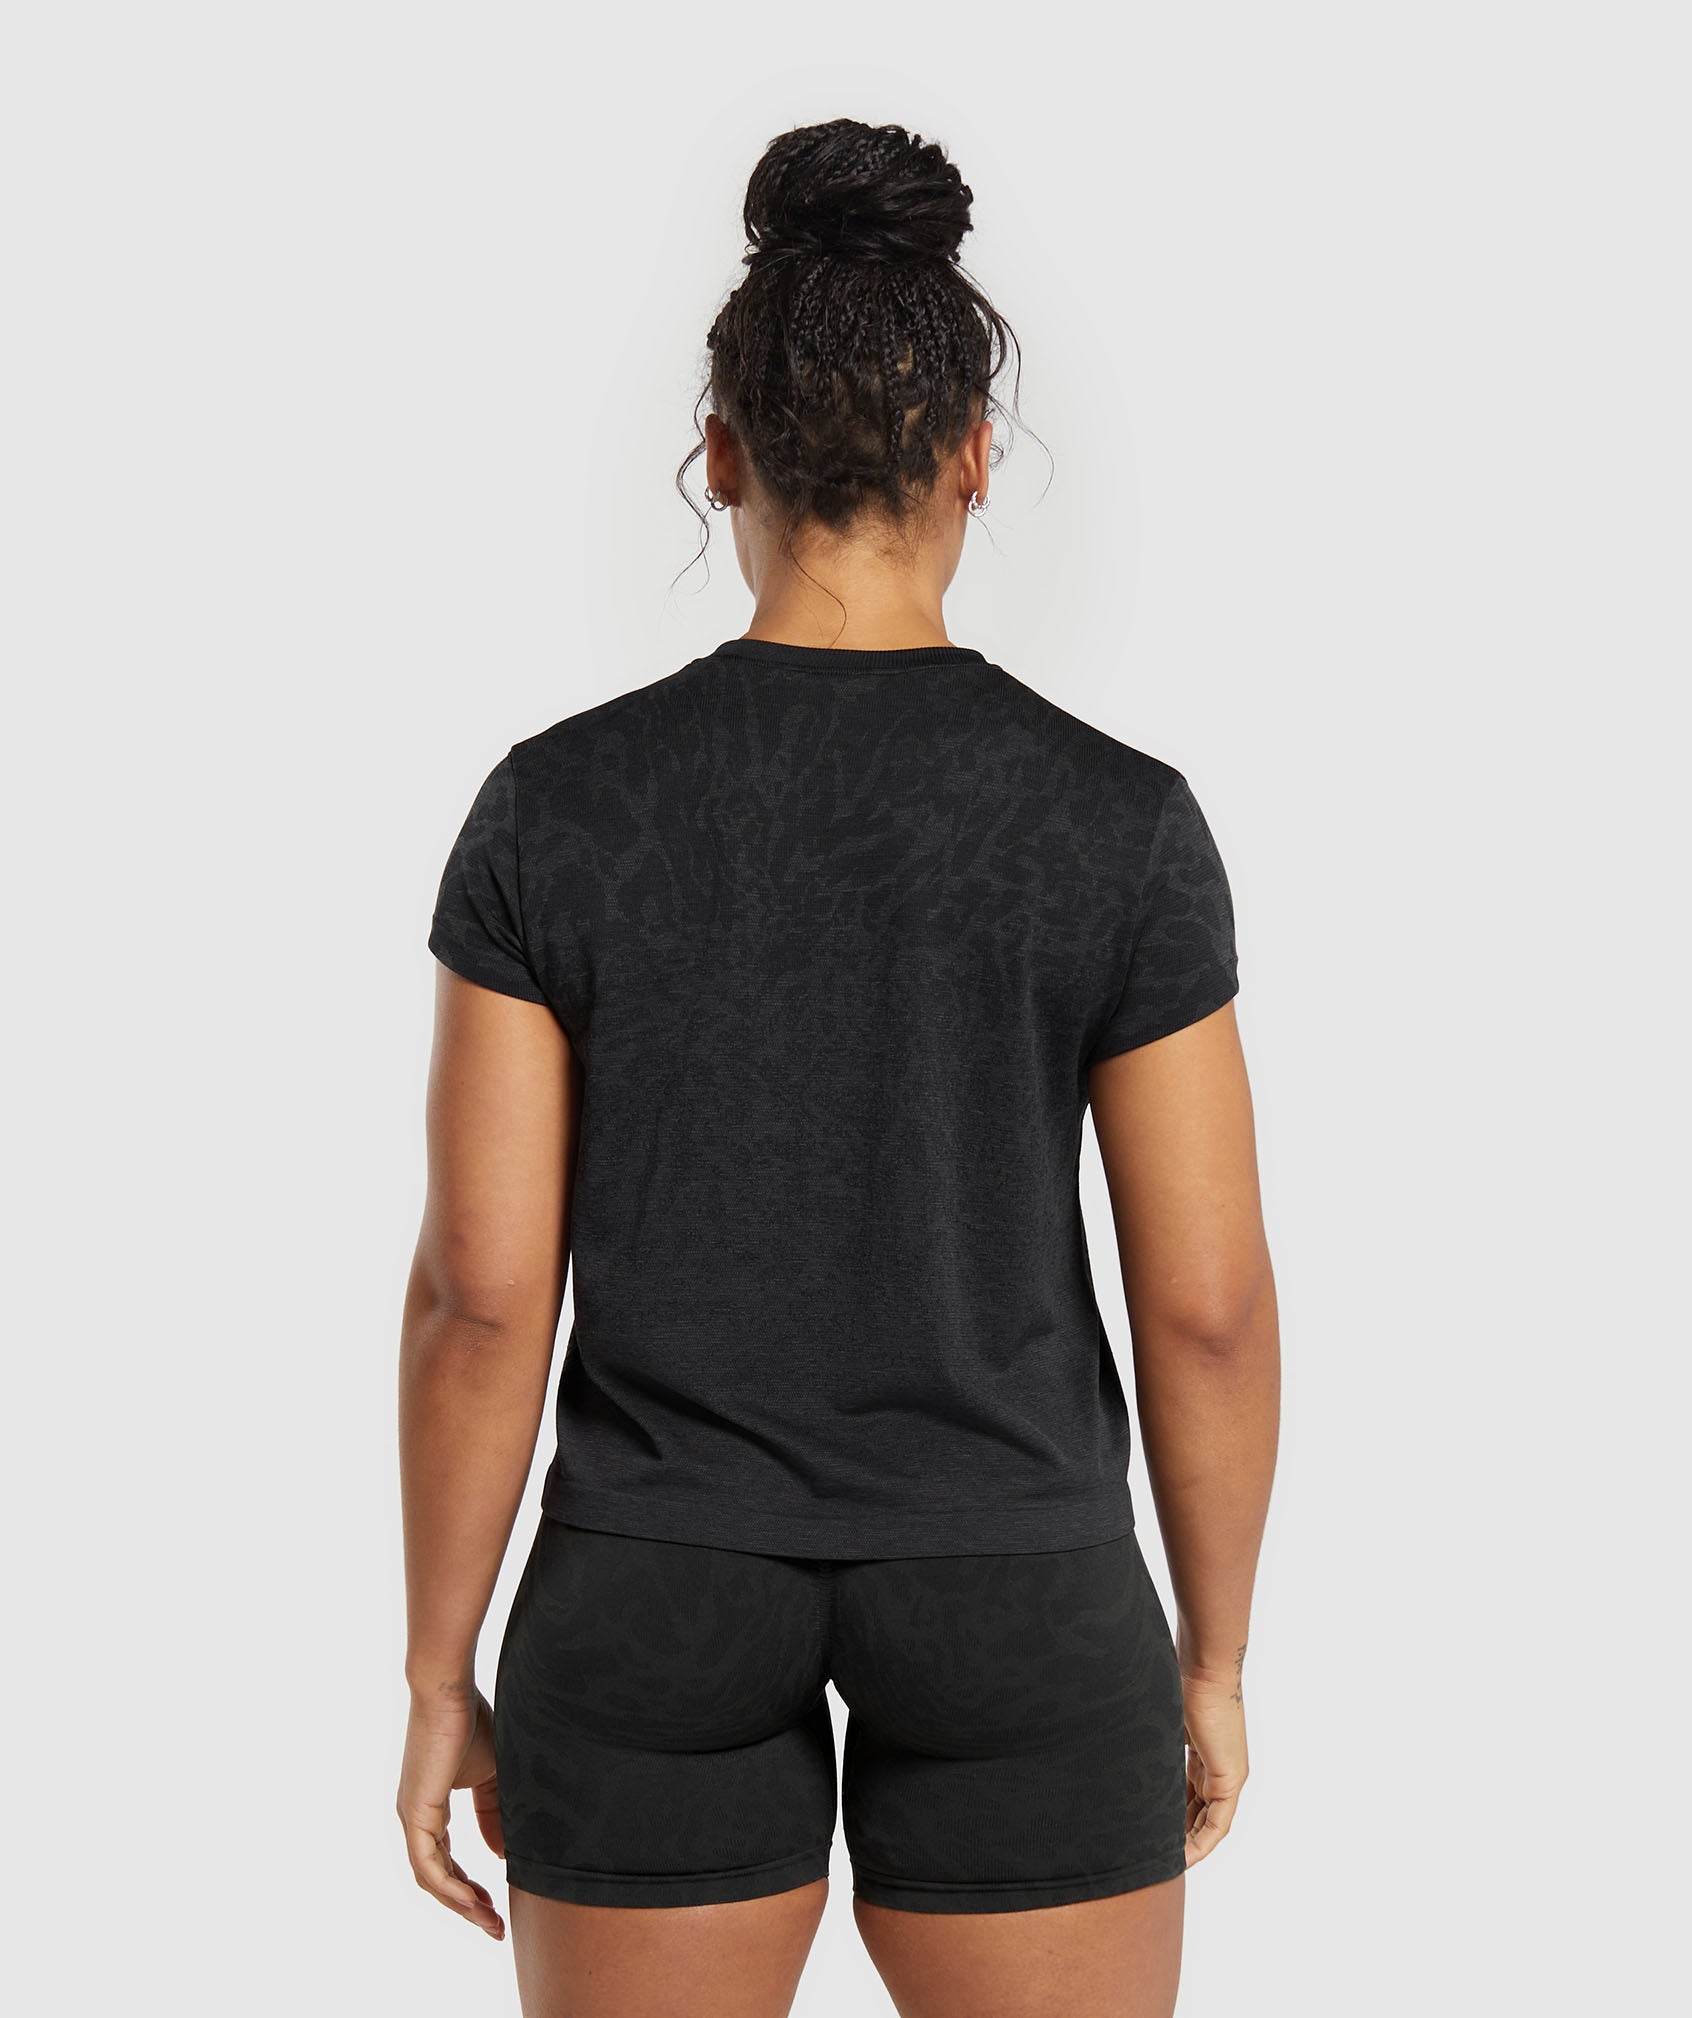 Adapt Safari Seamless  Faded T-Shirt in Black/Asphalt Grey - view 2